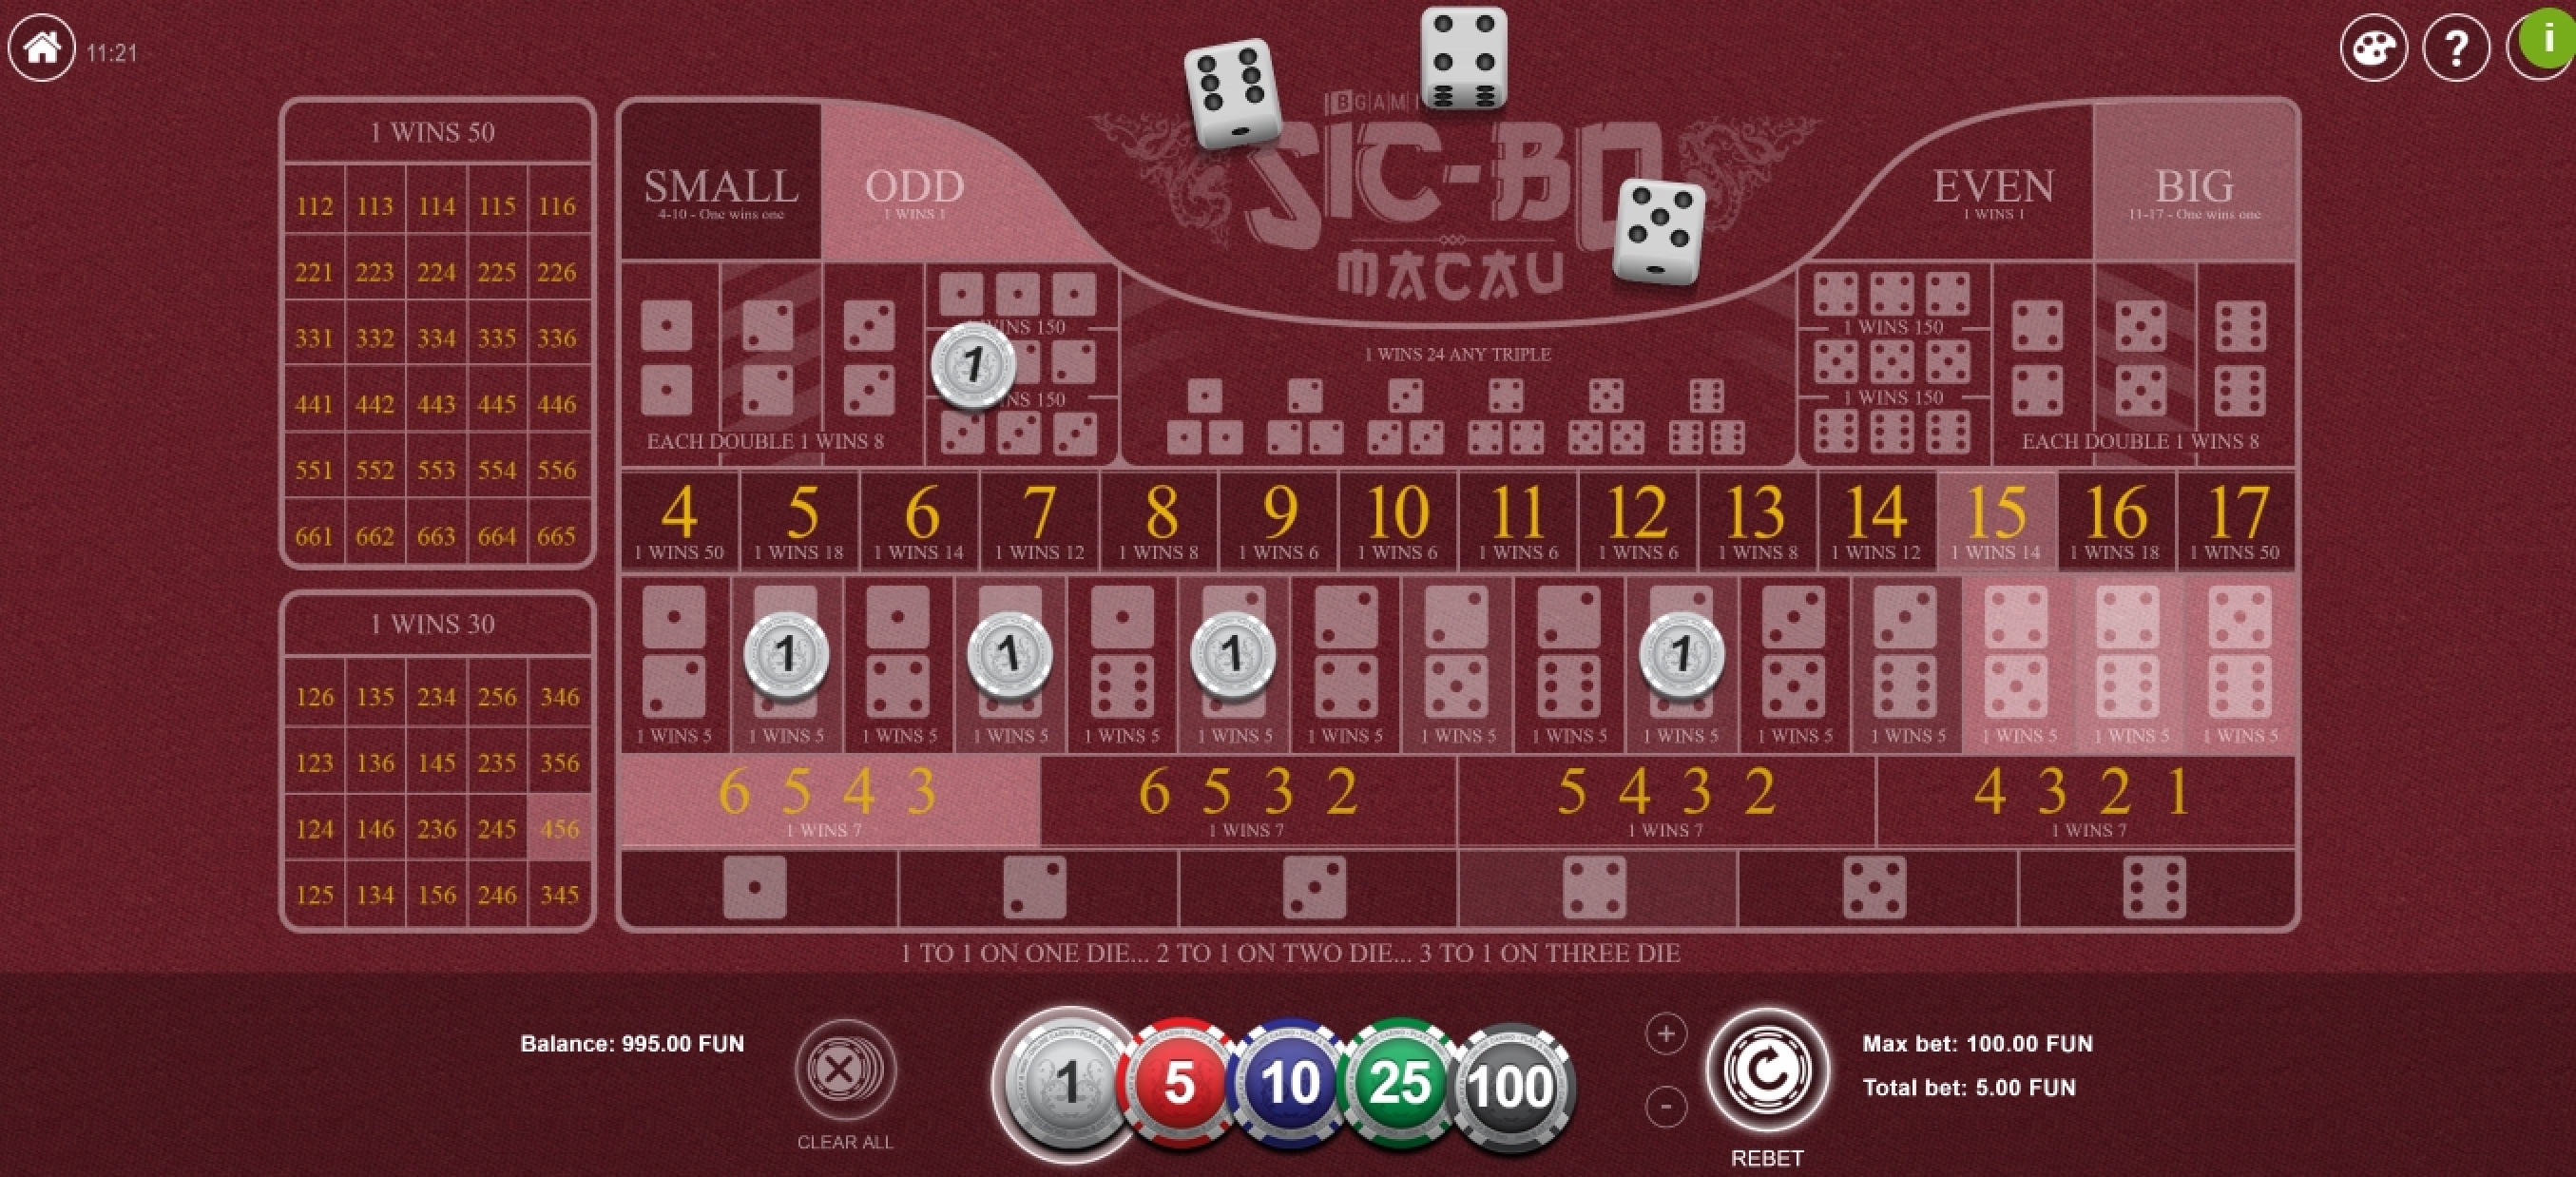 Win Money in Sic Bo Macau Free Slot Game by BGAMING